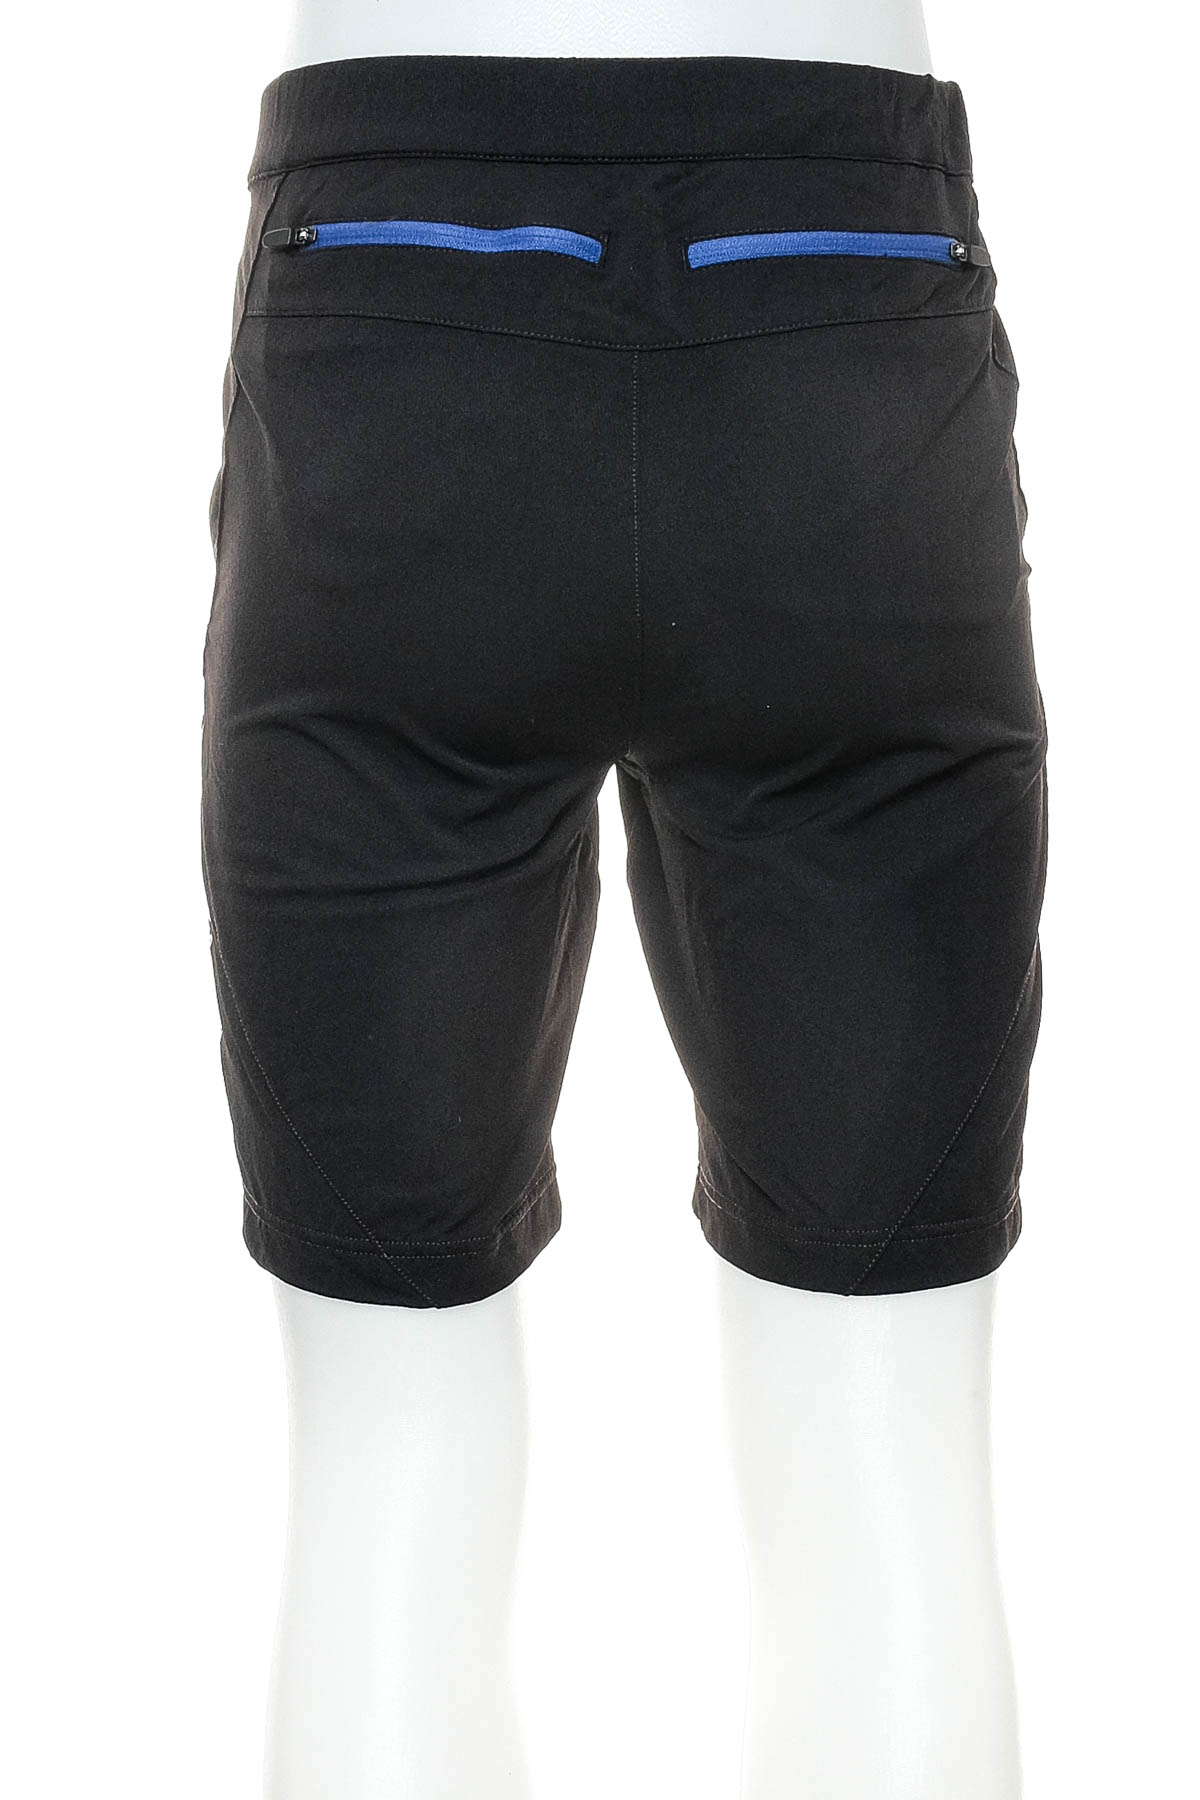 Men's shorts - Yamaha - 1